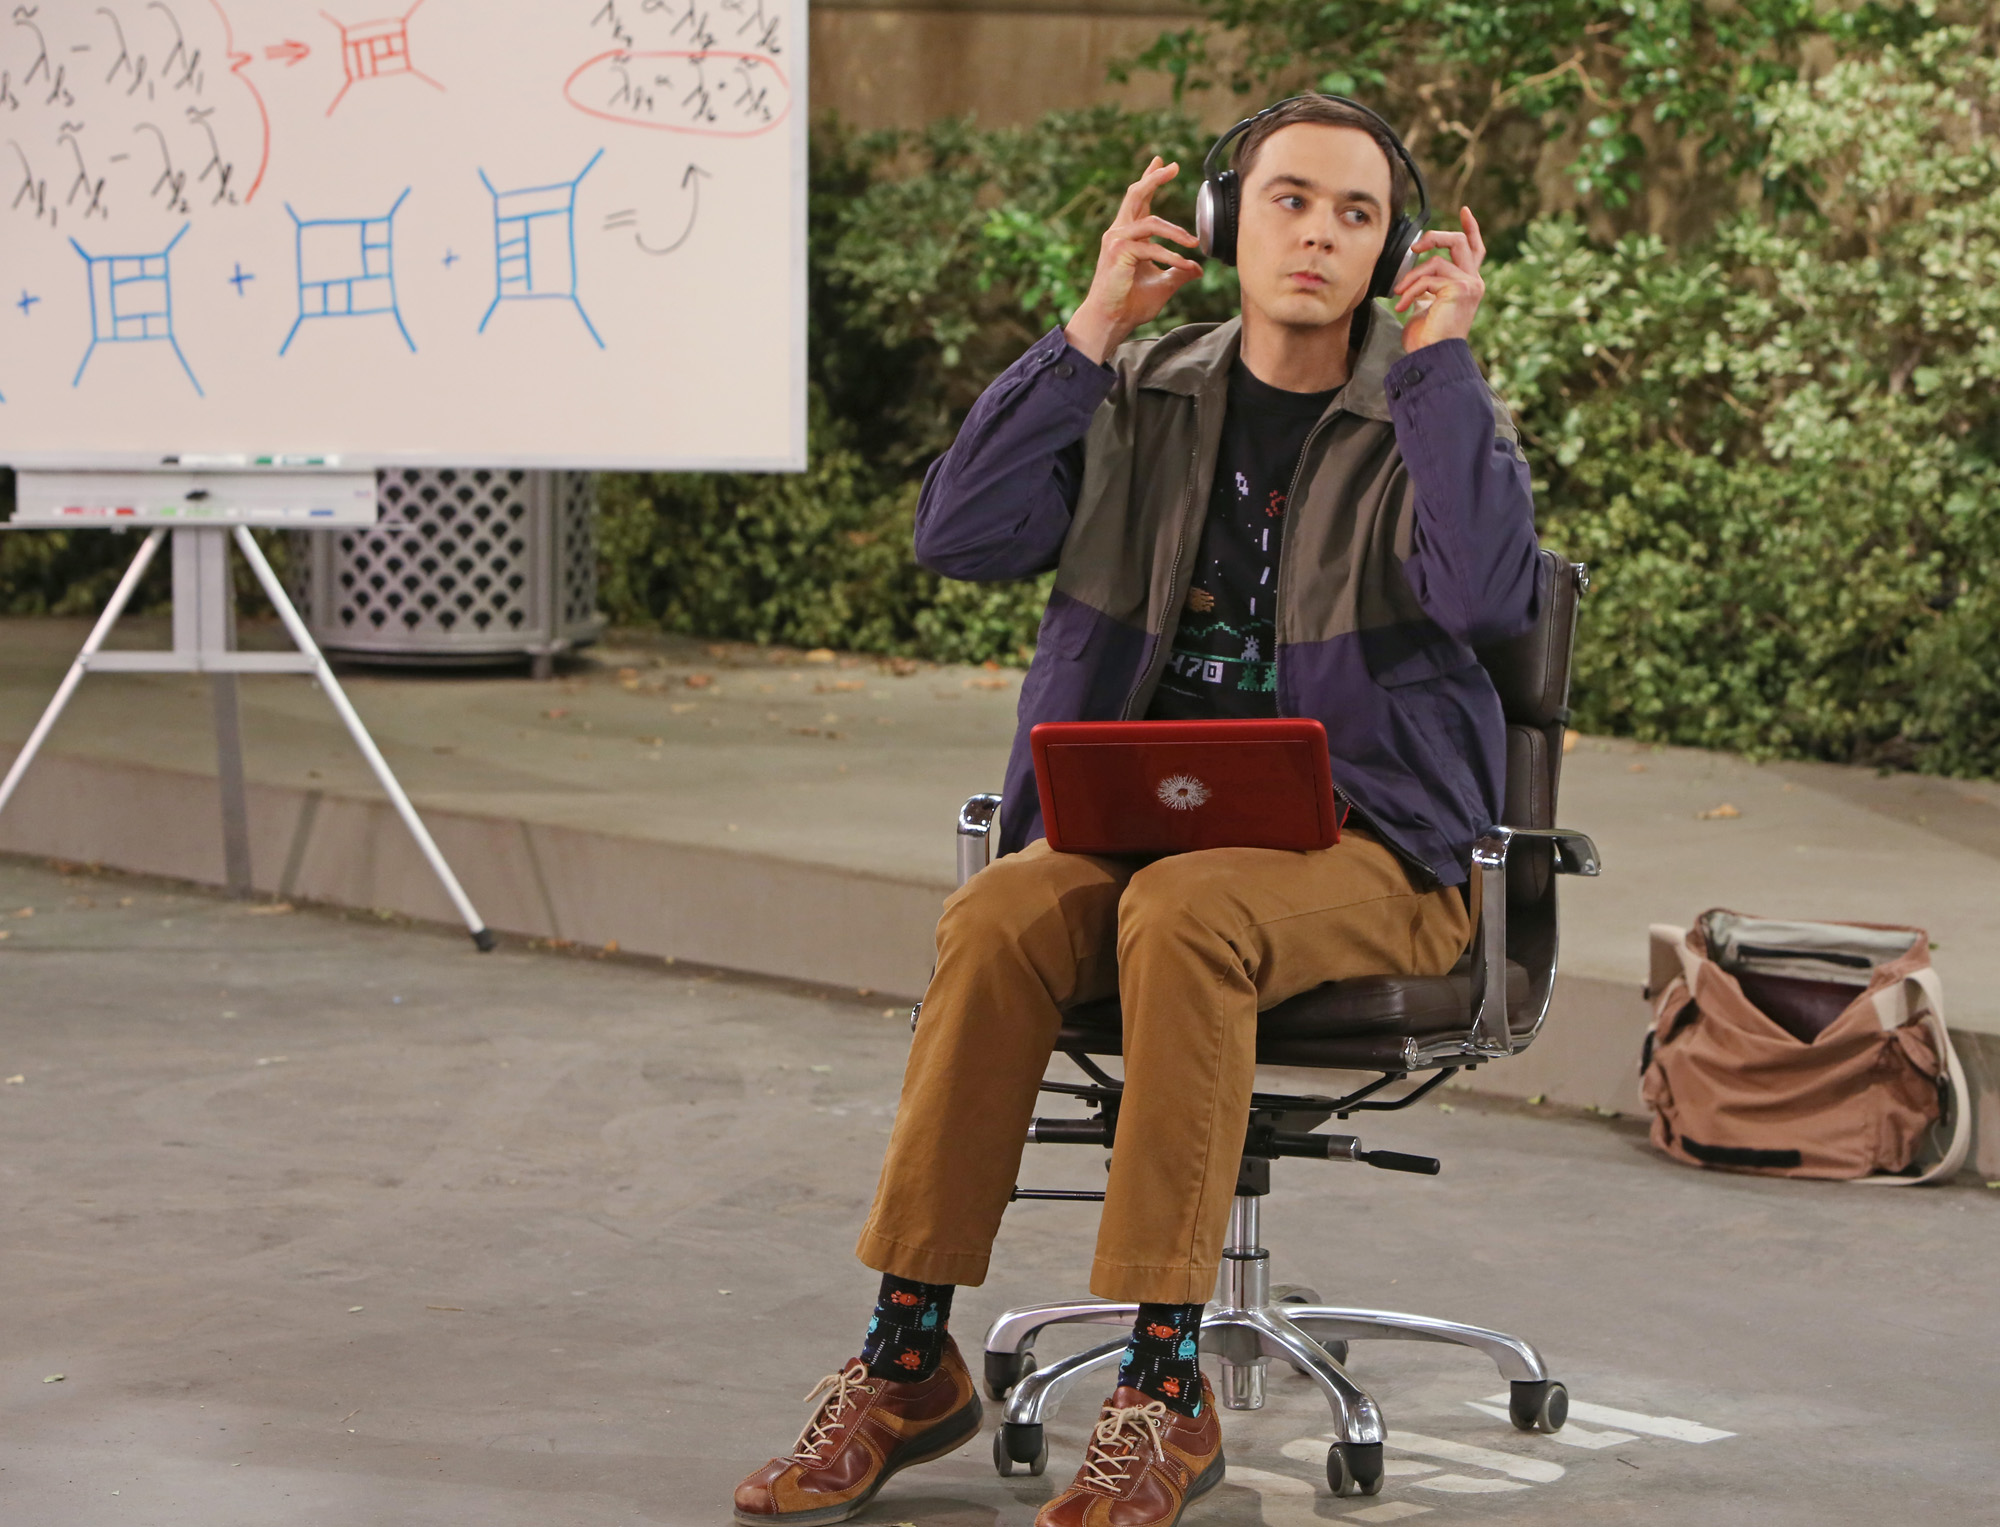 Big Bang Theory: Jim Parsons as Sheldon